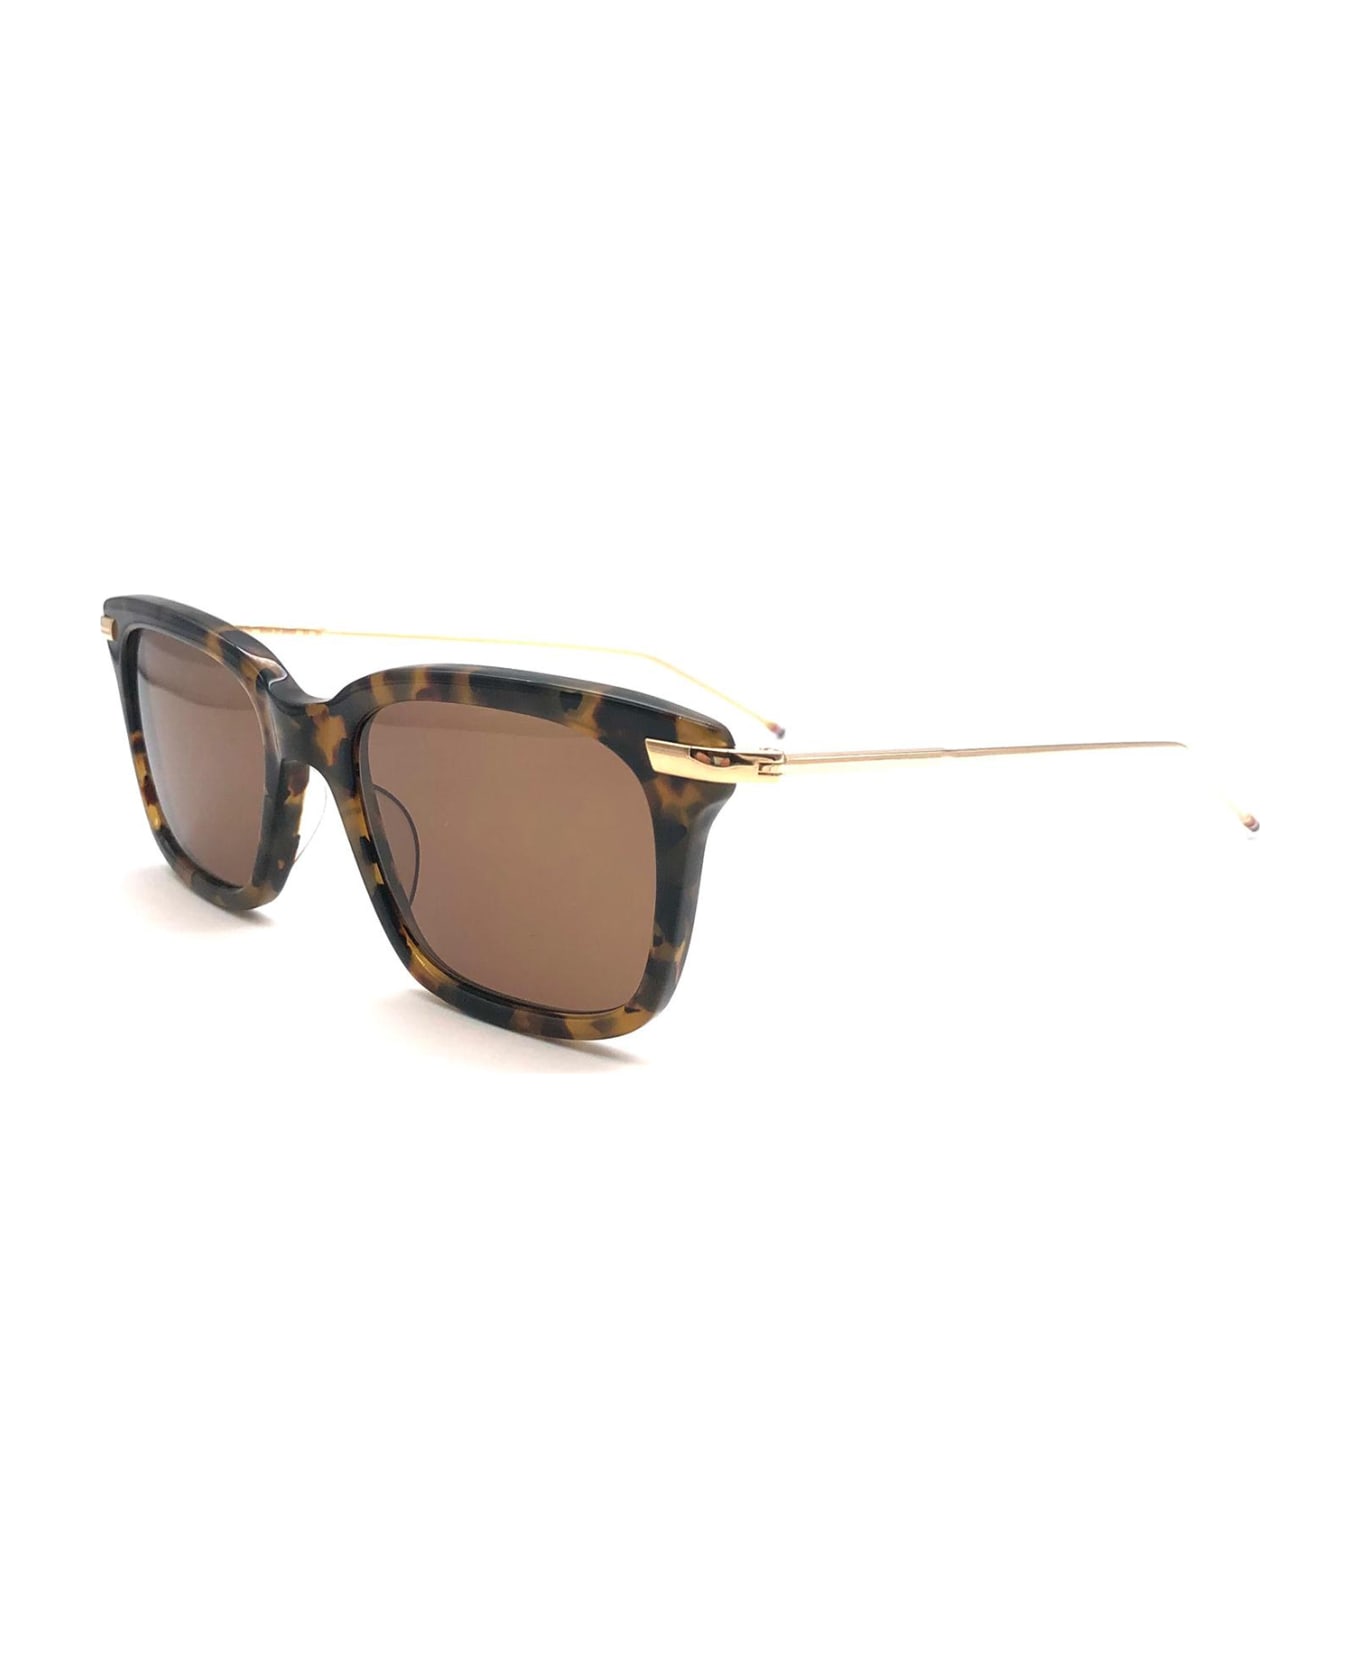 Thom Browne UES701A/G0003 Sunglasses - Dark Brown